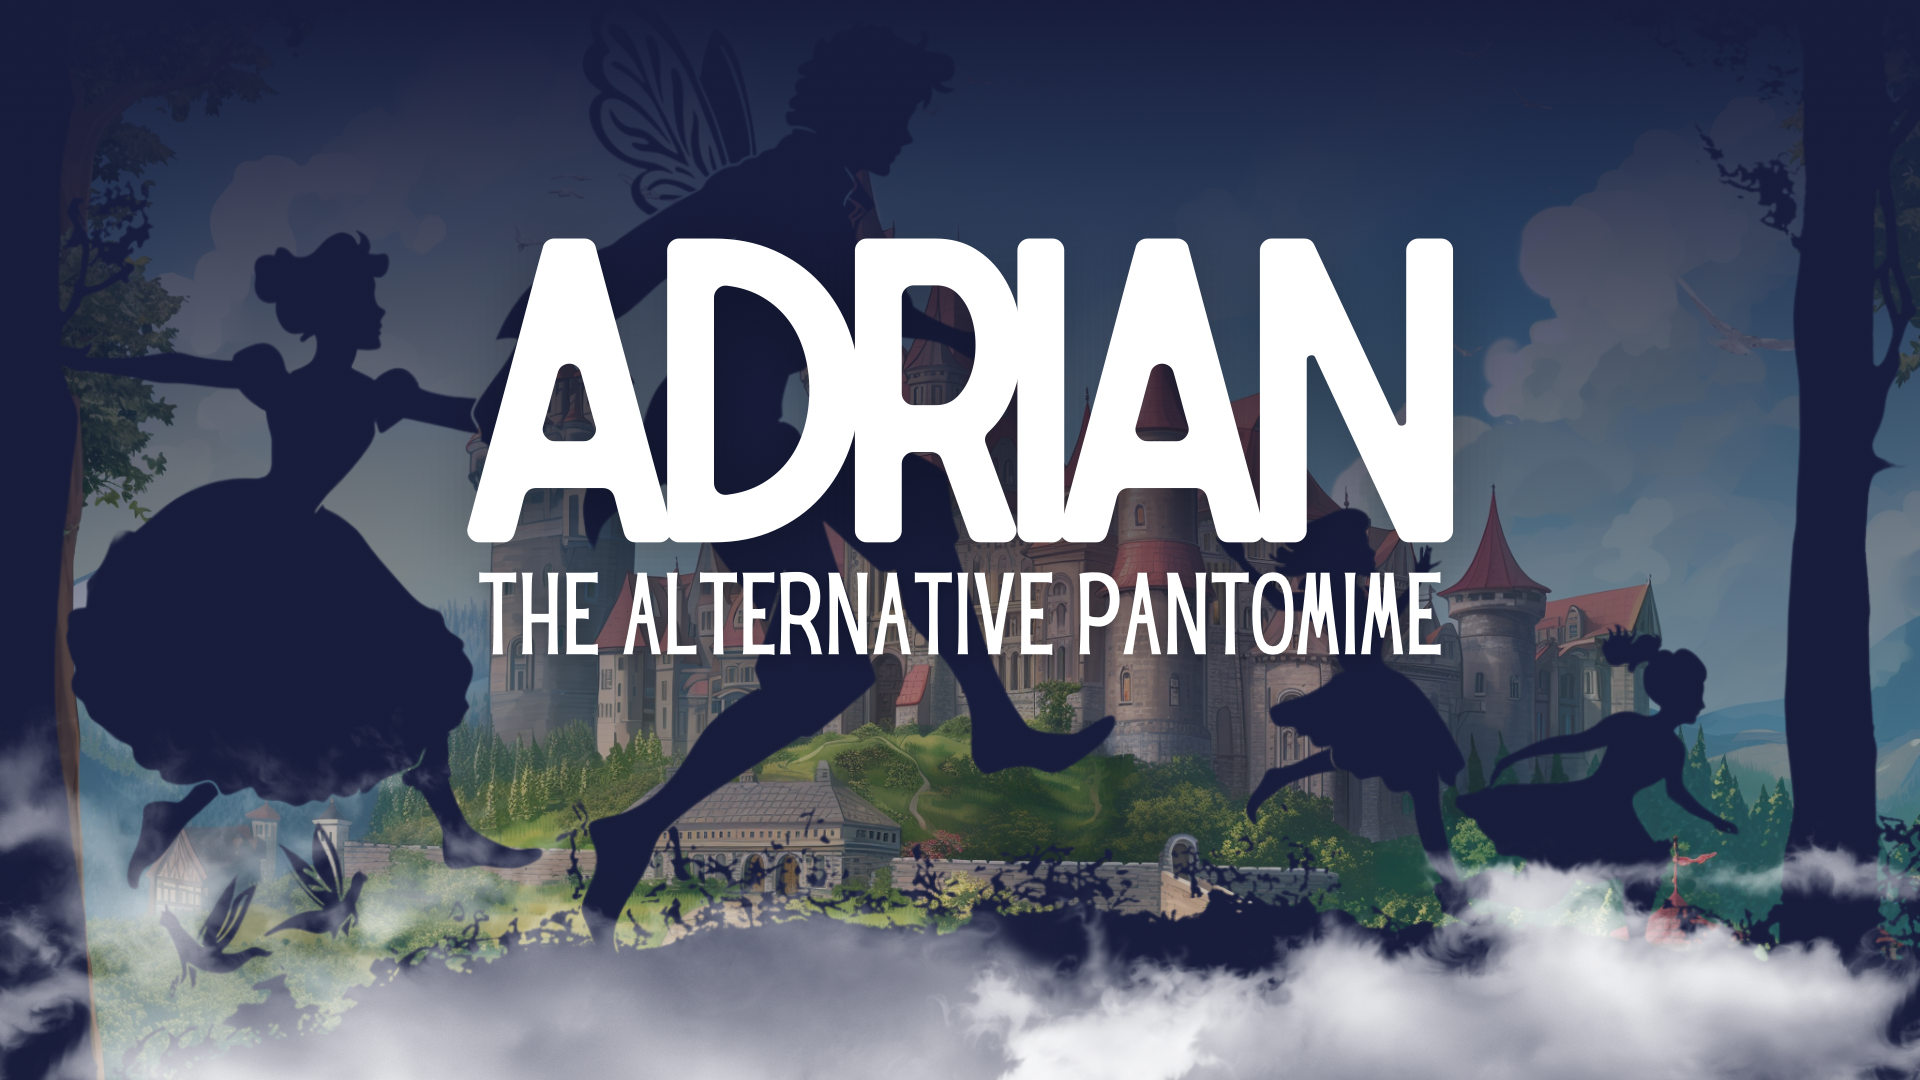 Family Panto: Adrian The Pantomime